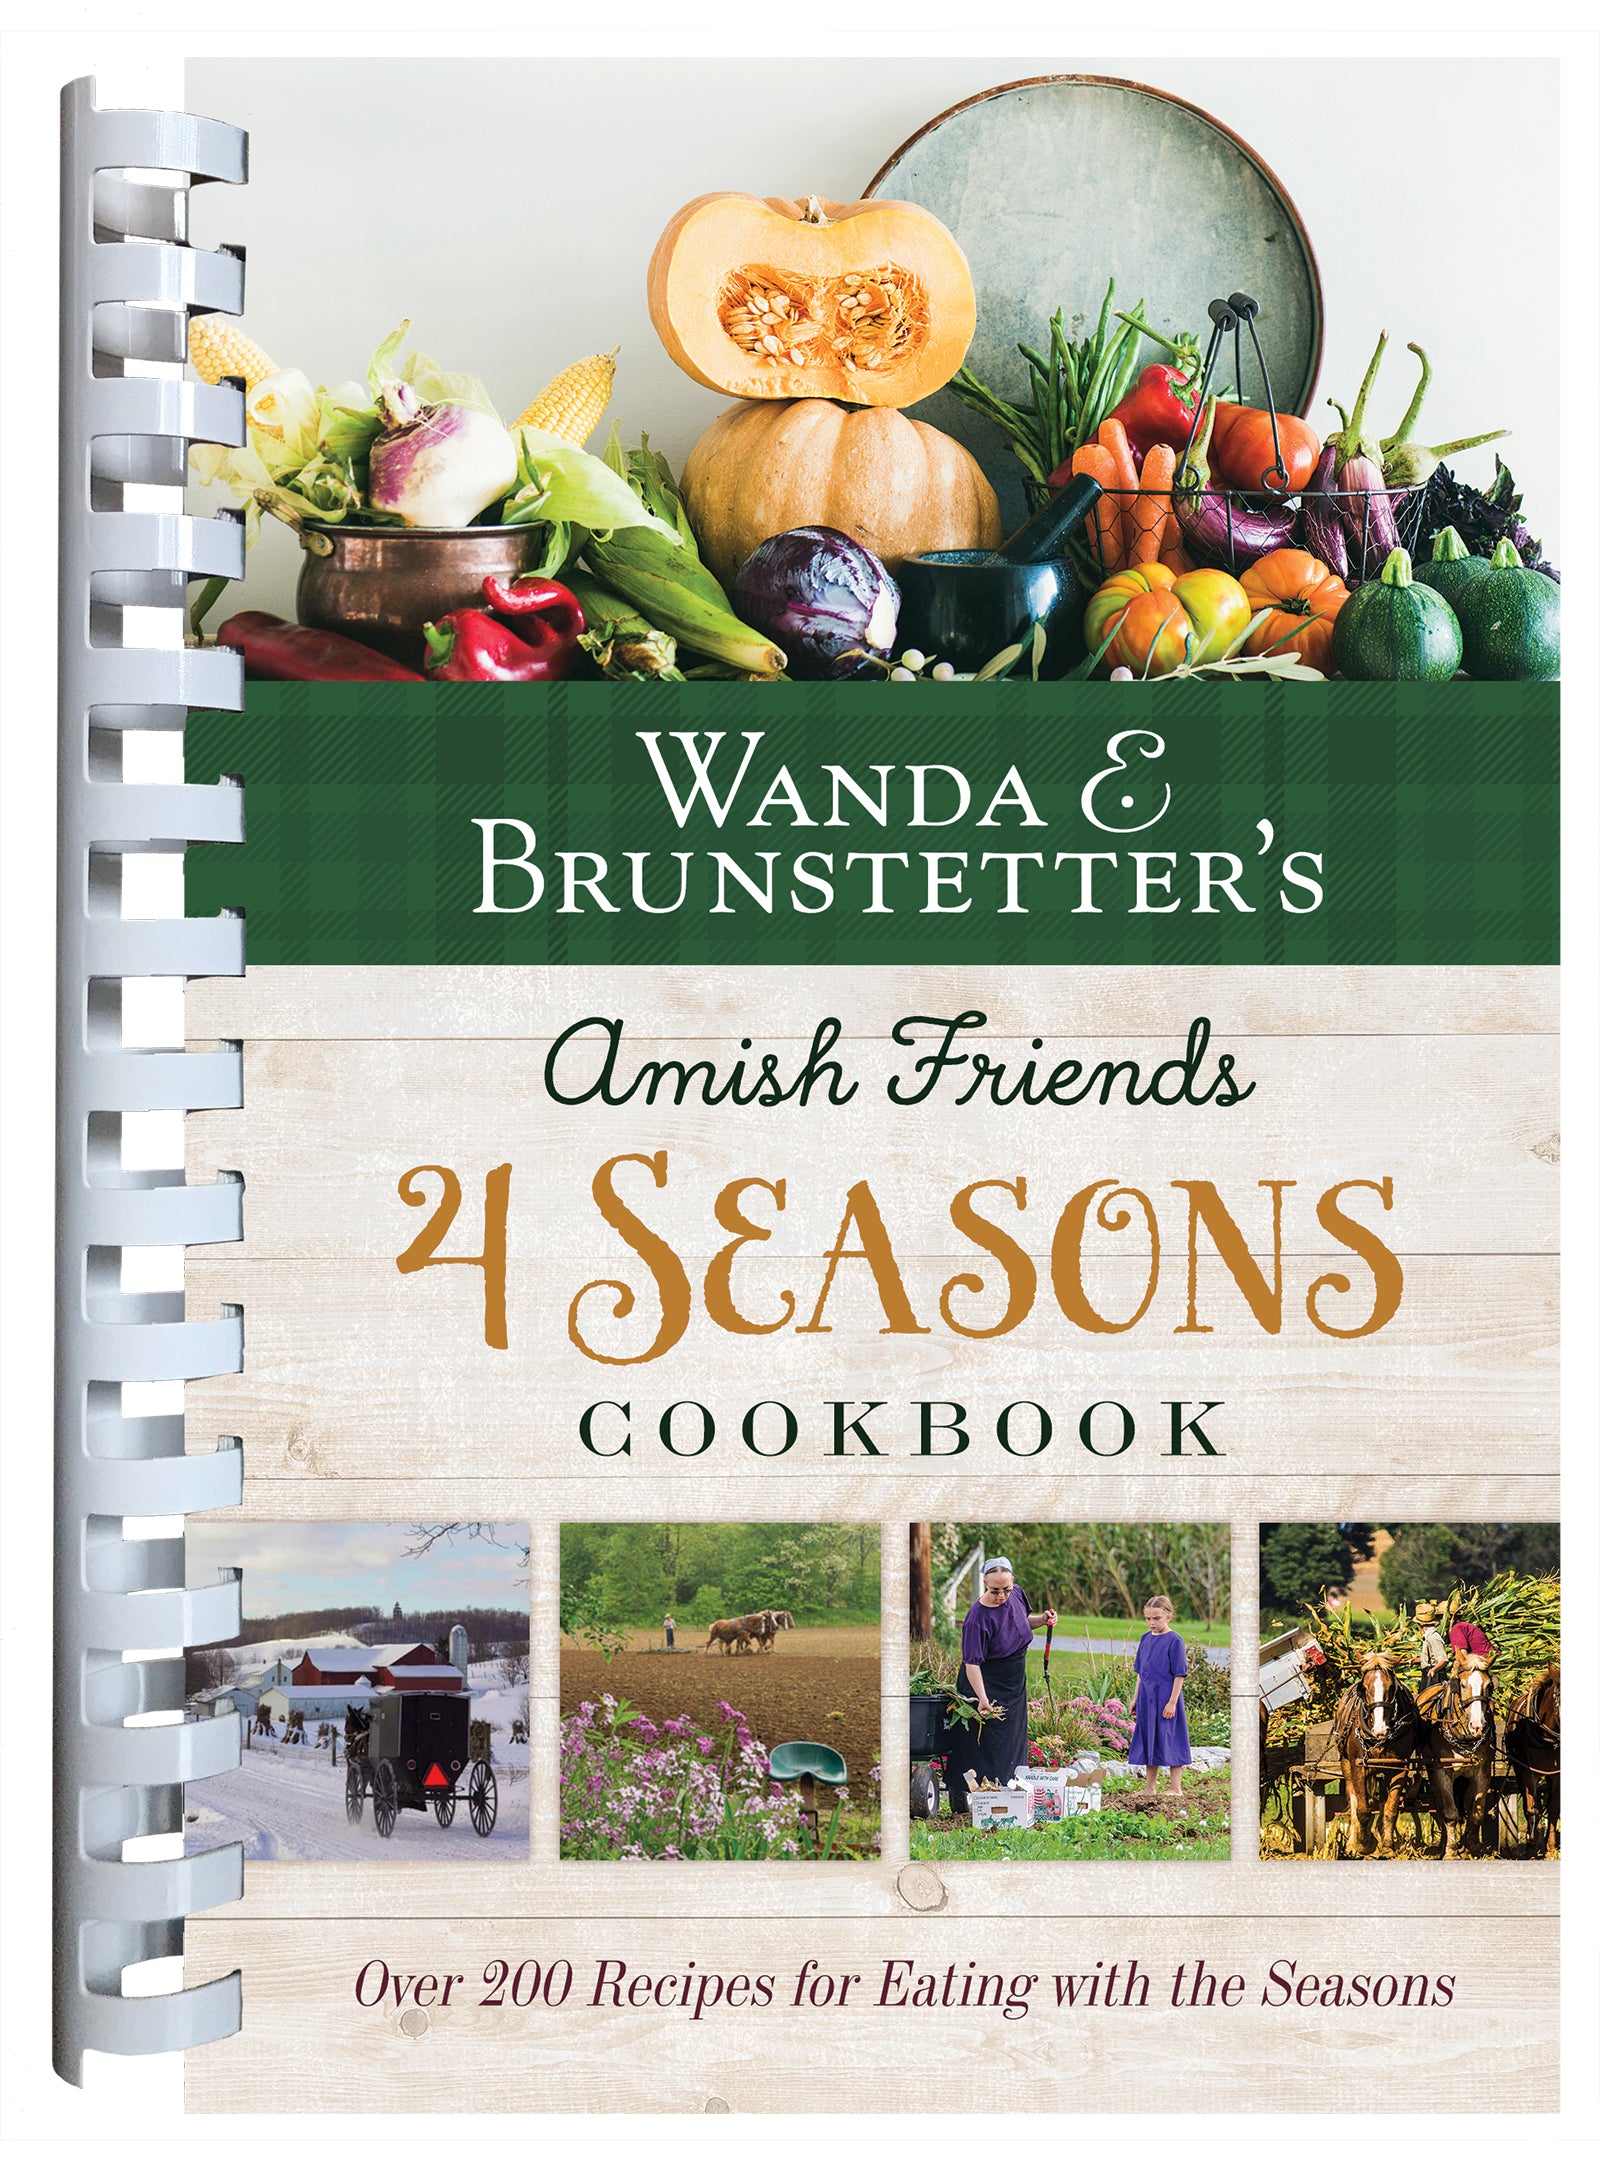 Wanda E. Brunstetter's Amish Friends 4 Seasons Cookbook - The Christian Gift Company